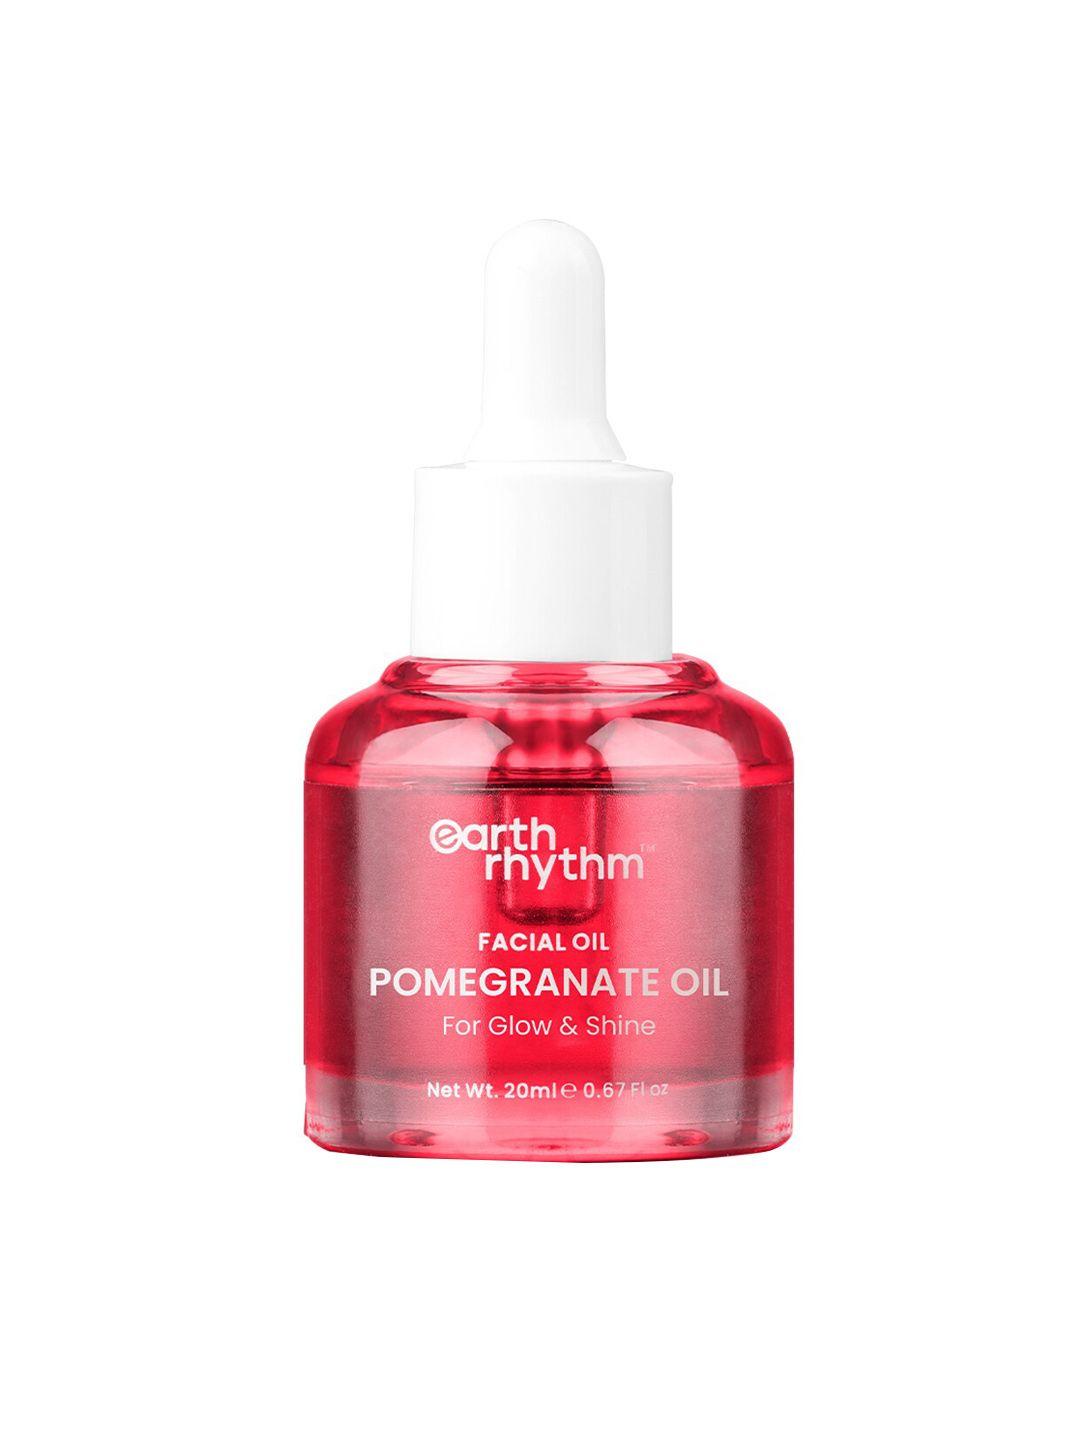 earth rhythm pomegranate facial oil for glow & shine - 20 ml